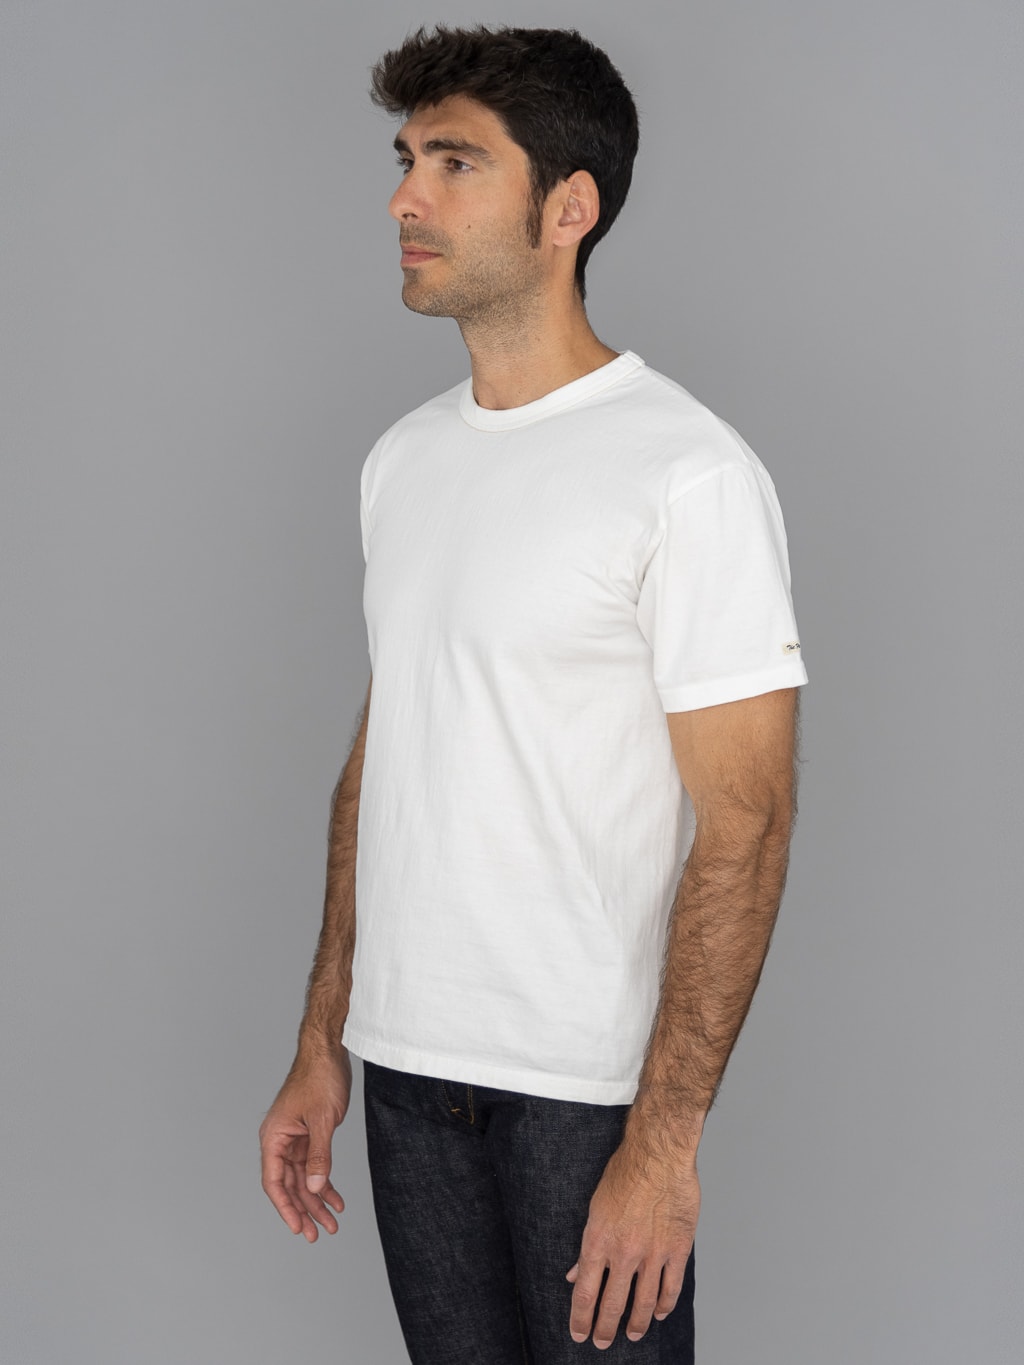 The Flat Head Plain Heavyweight TShirt white no side seam